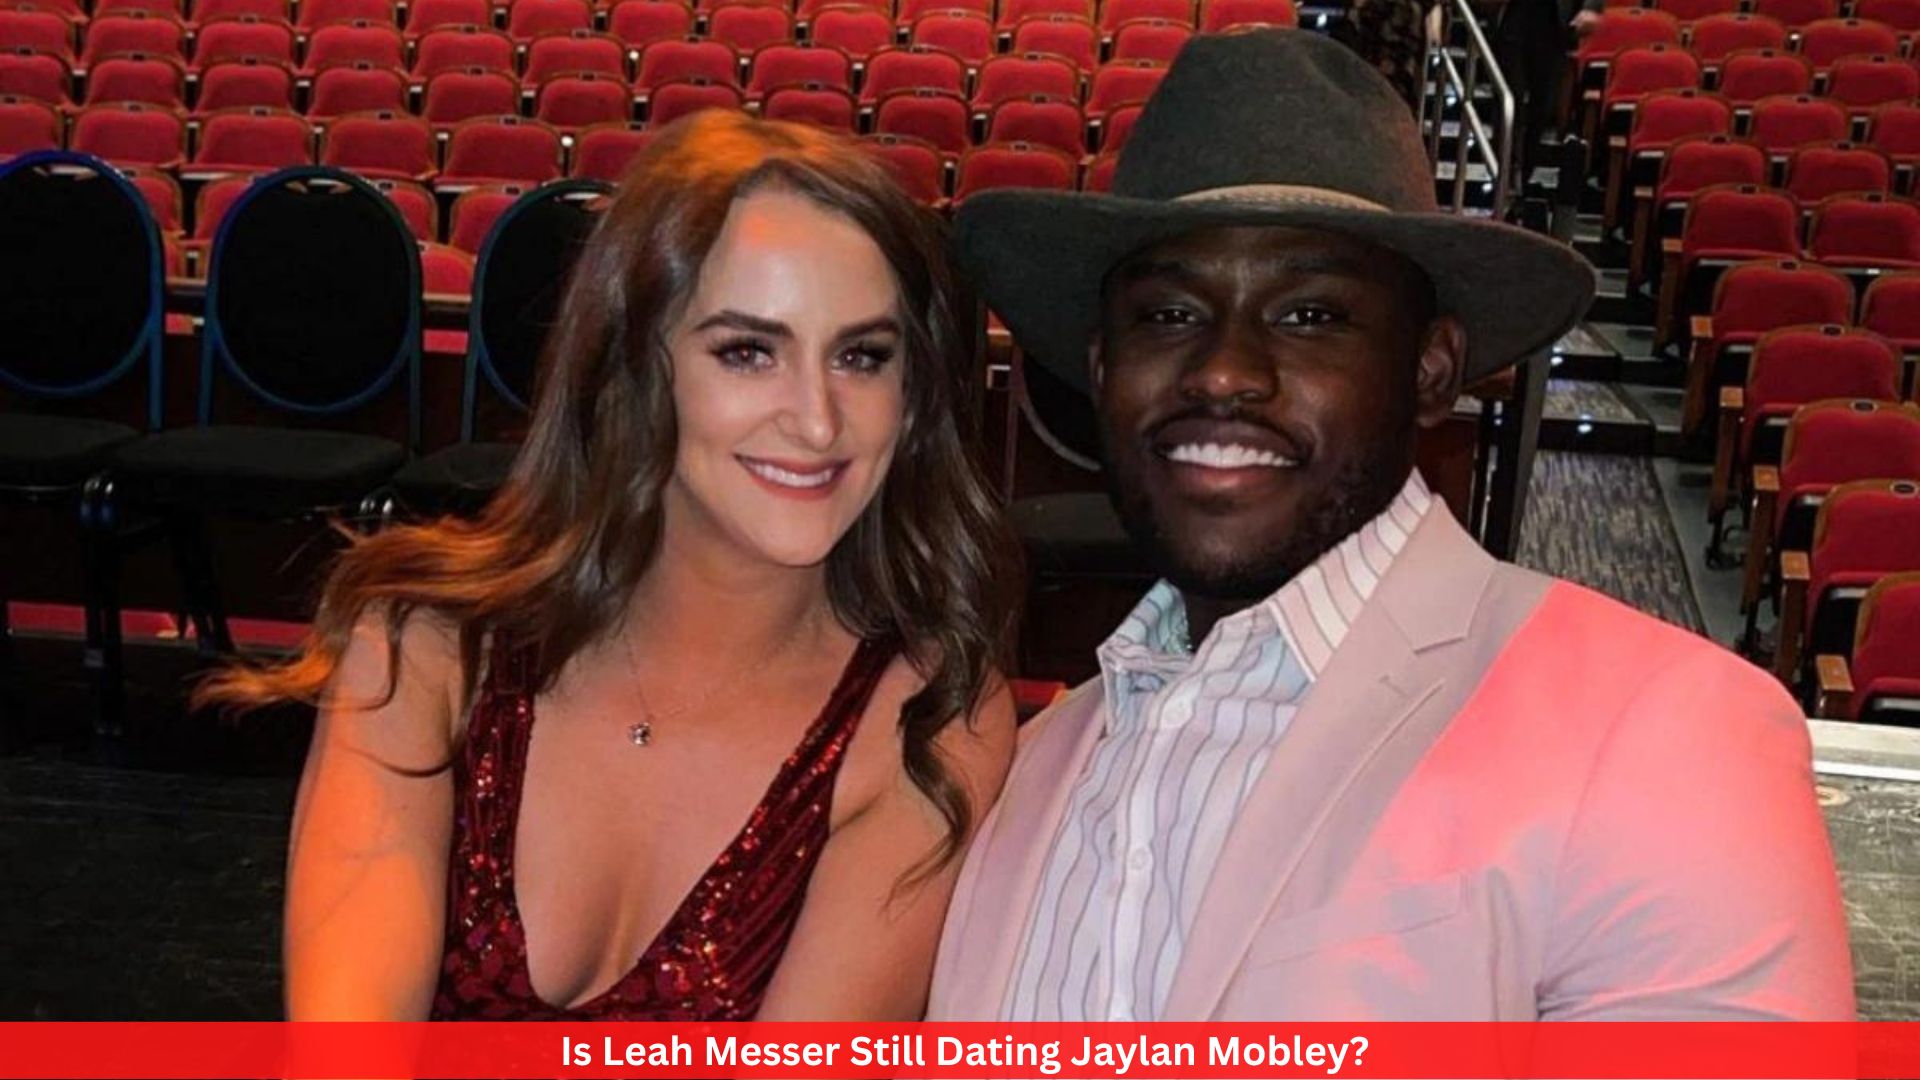  Is Leah Messer Still Dating Jaylan Mobley?